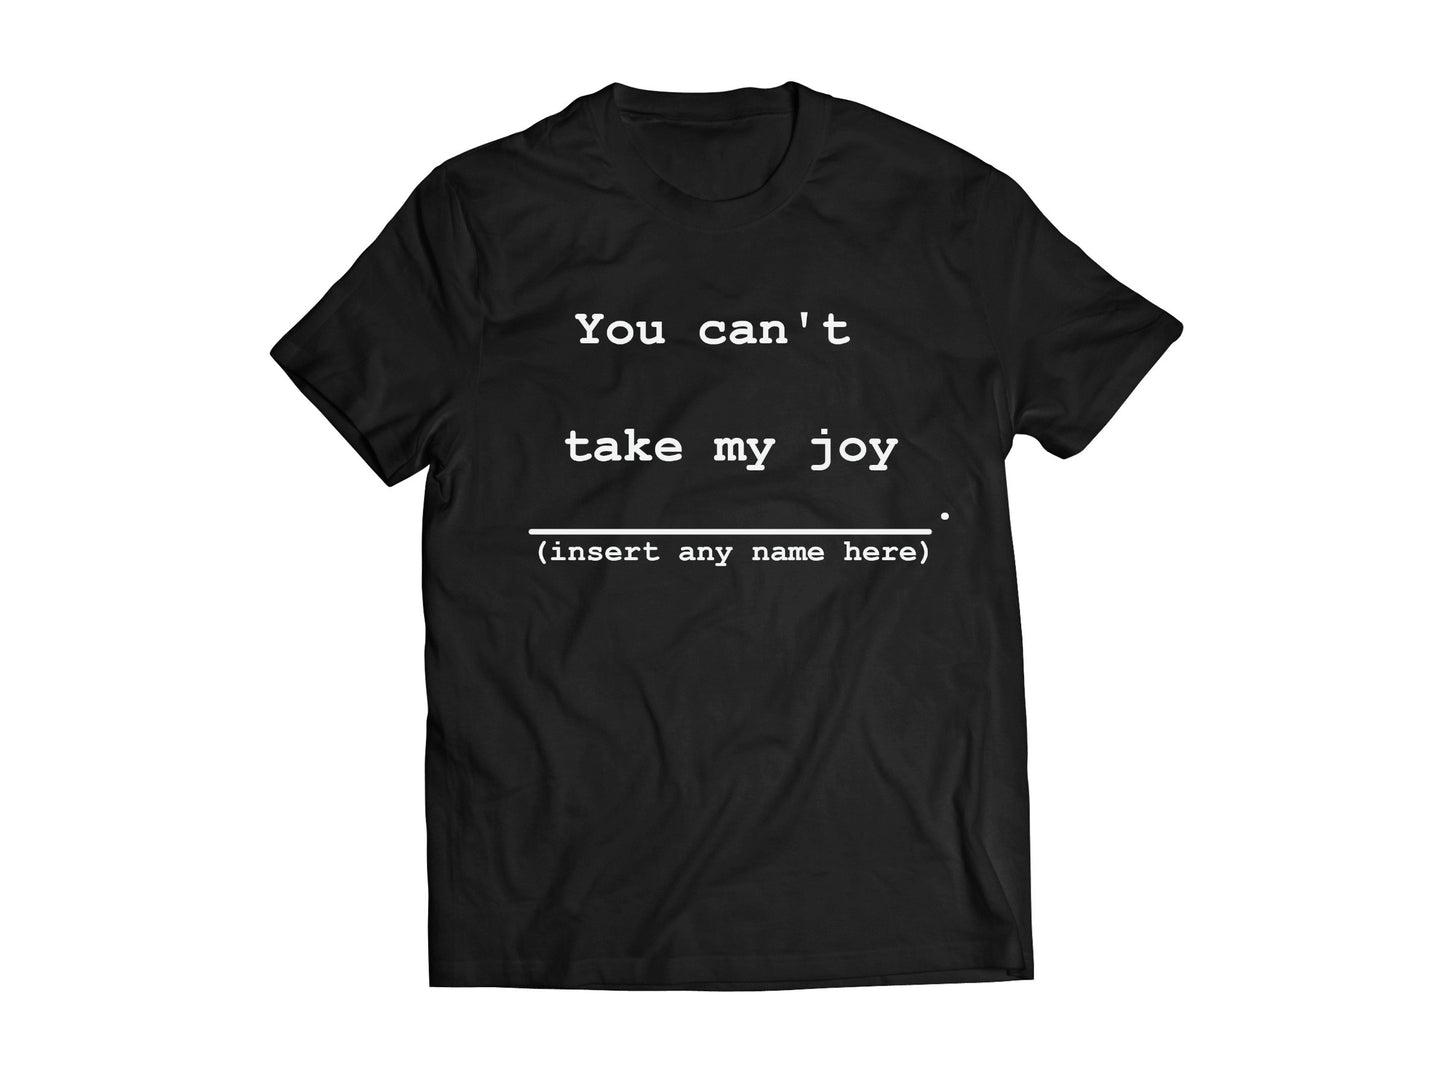 My Joy T-Shirt